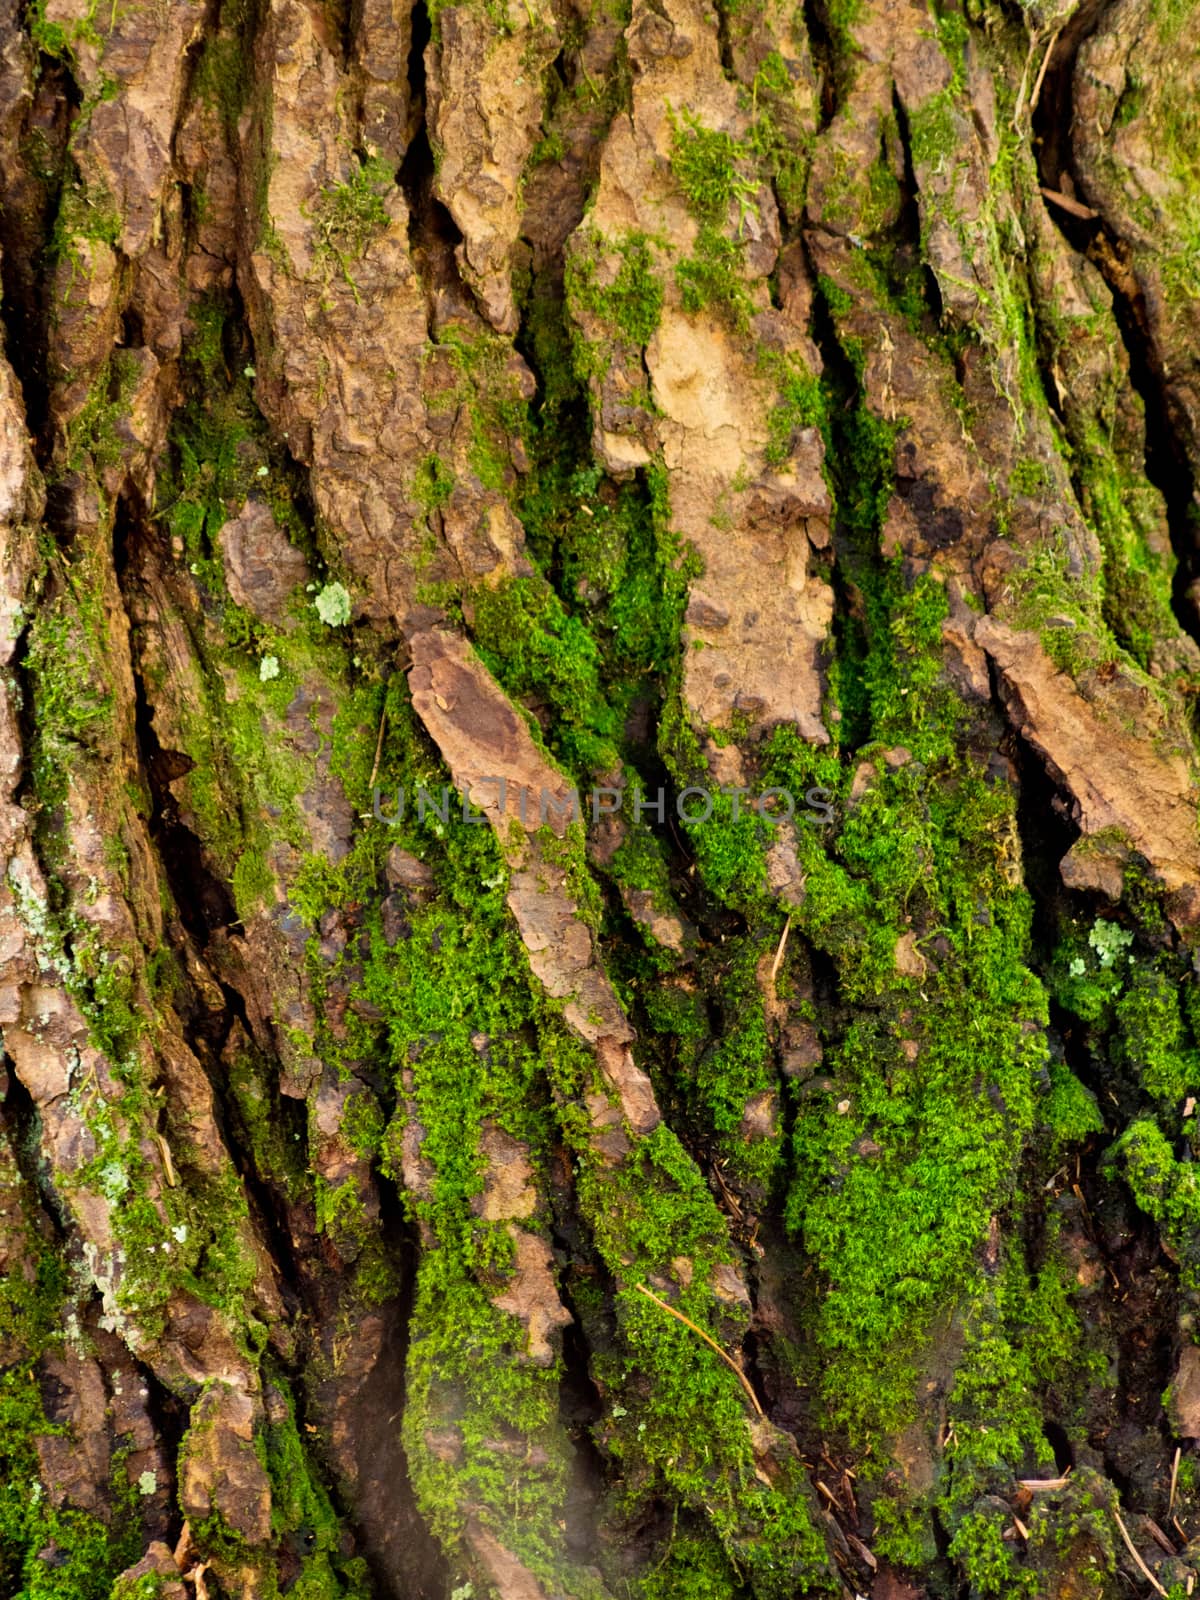 Moss Growing on Tree Bark by NikkiGensert